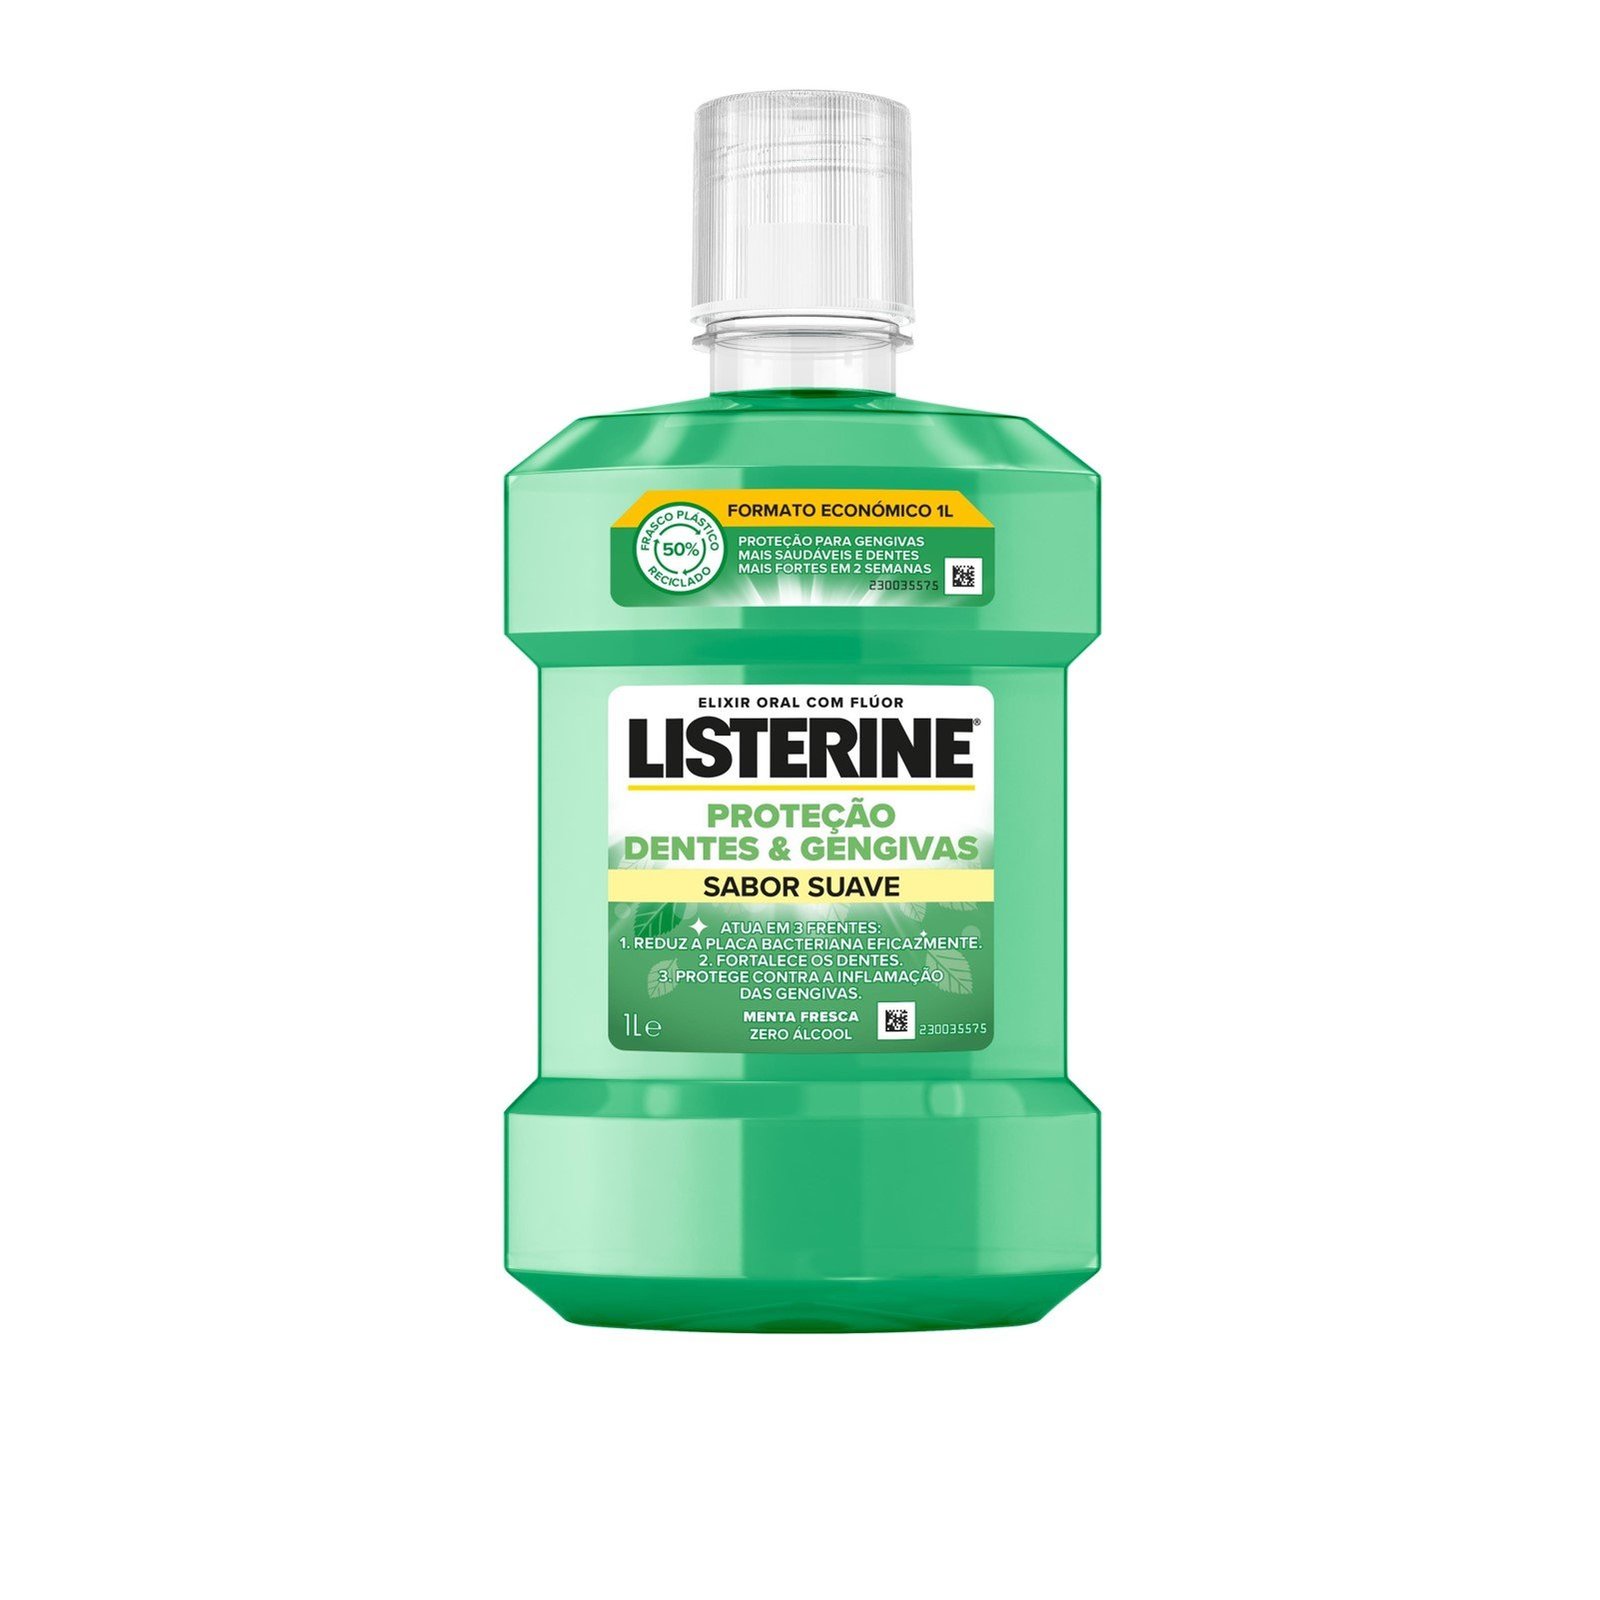 Listerine Teeth And Gum Protection Mild Taste Mouthwash 1L (33.8 fl oz)